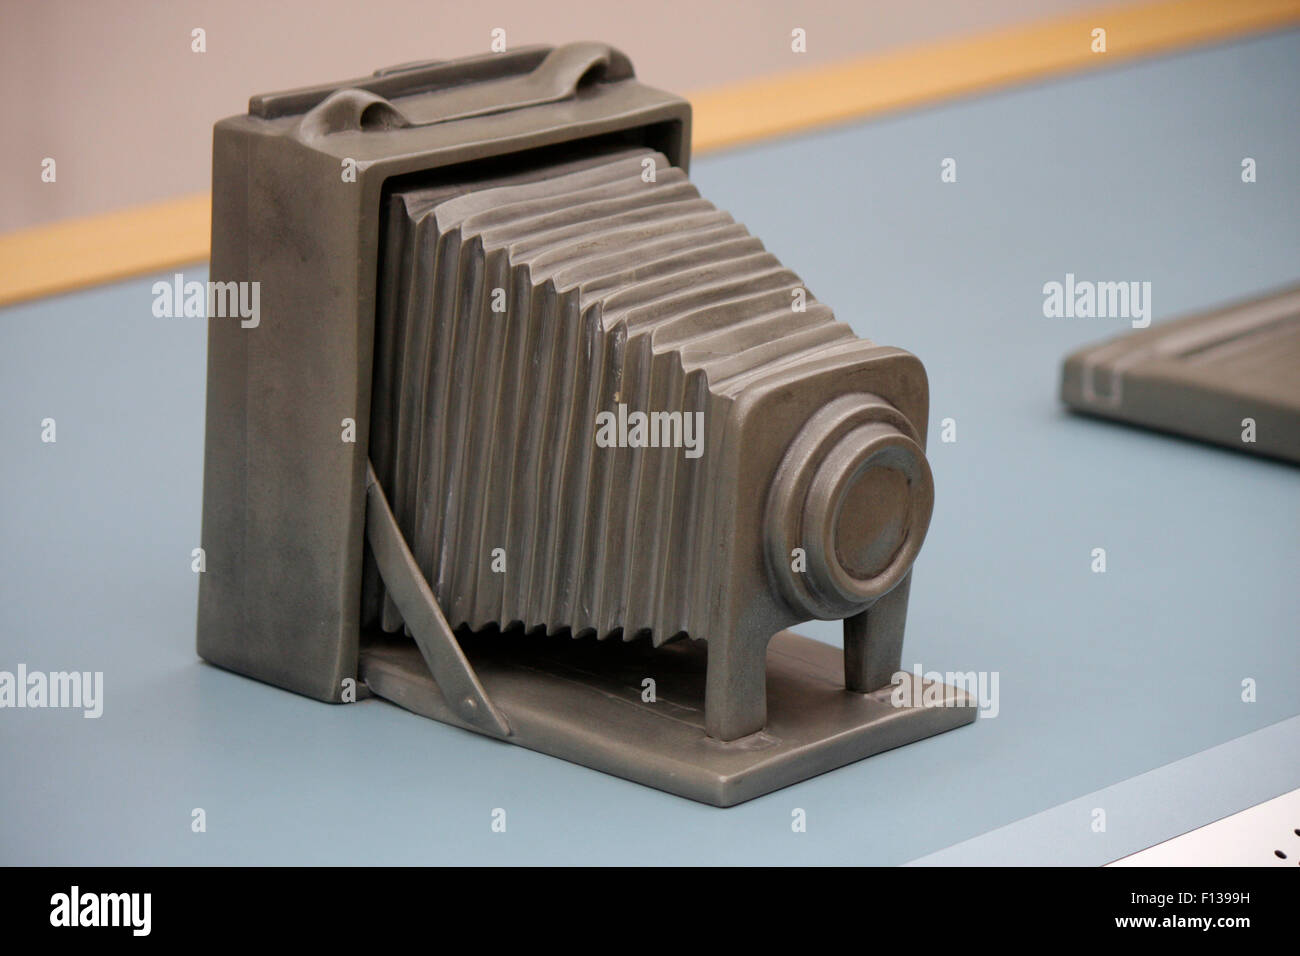 Modell einer Fotokamera - Deutsches Technikmuseum, Berlin-Kreuzberg. Banque D'Images